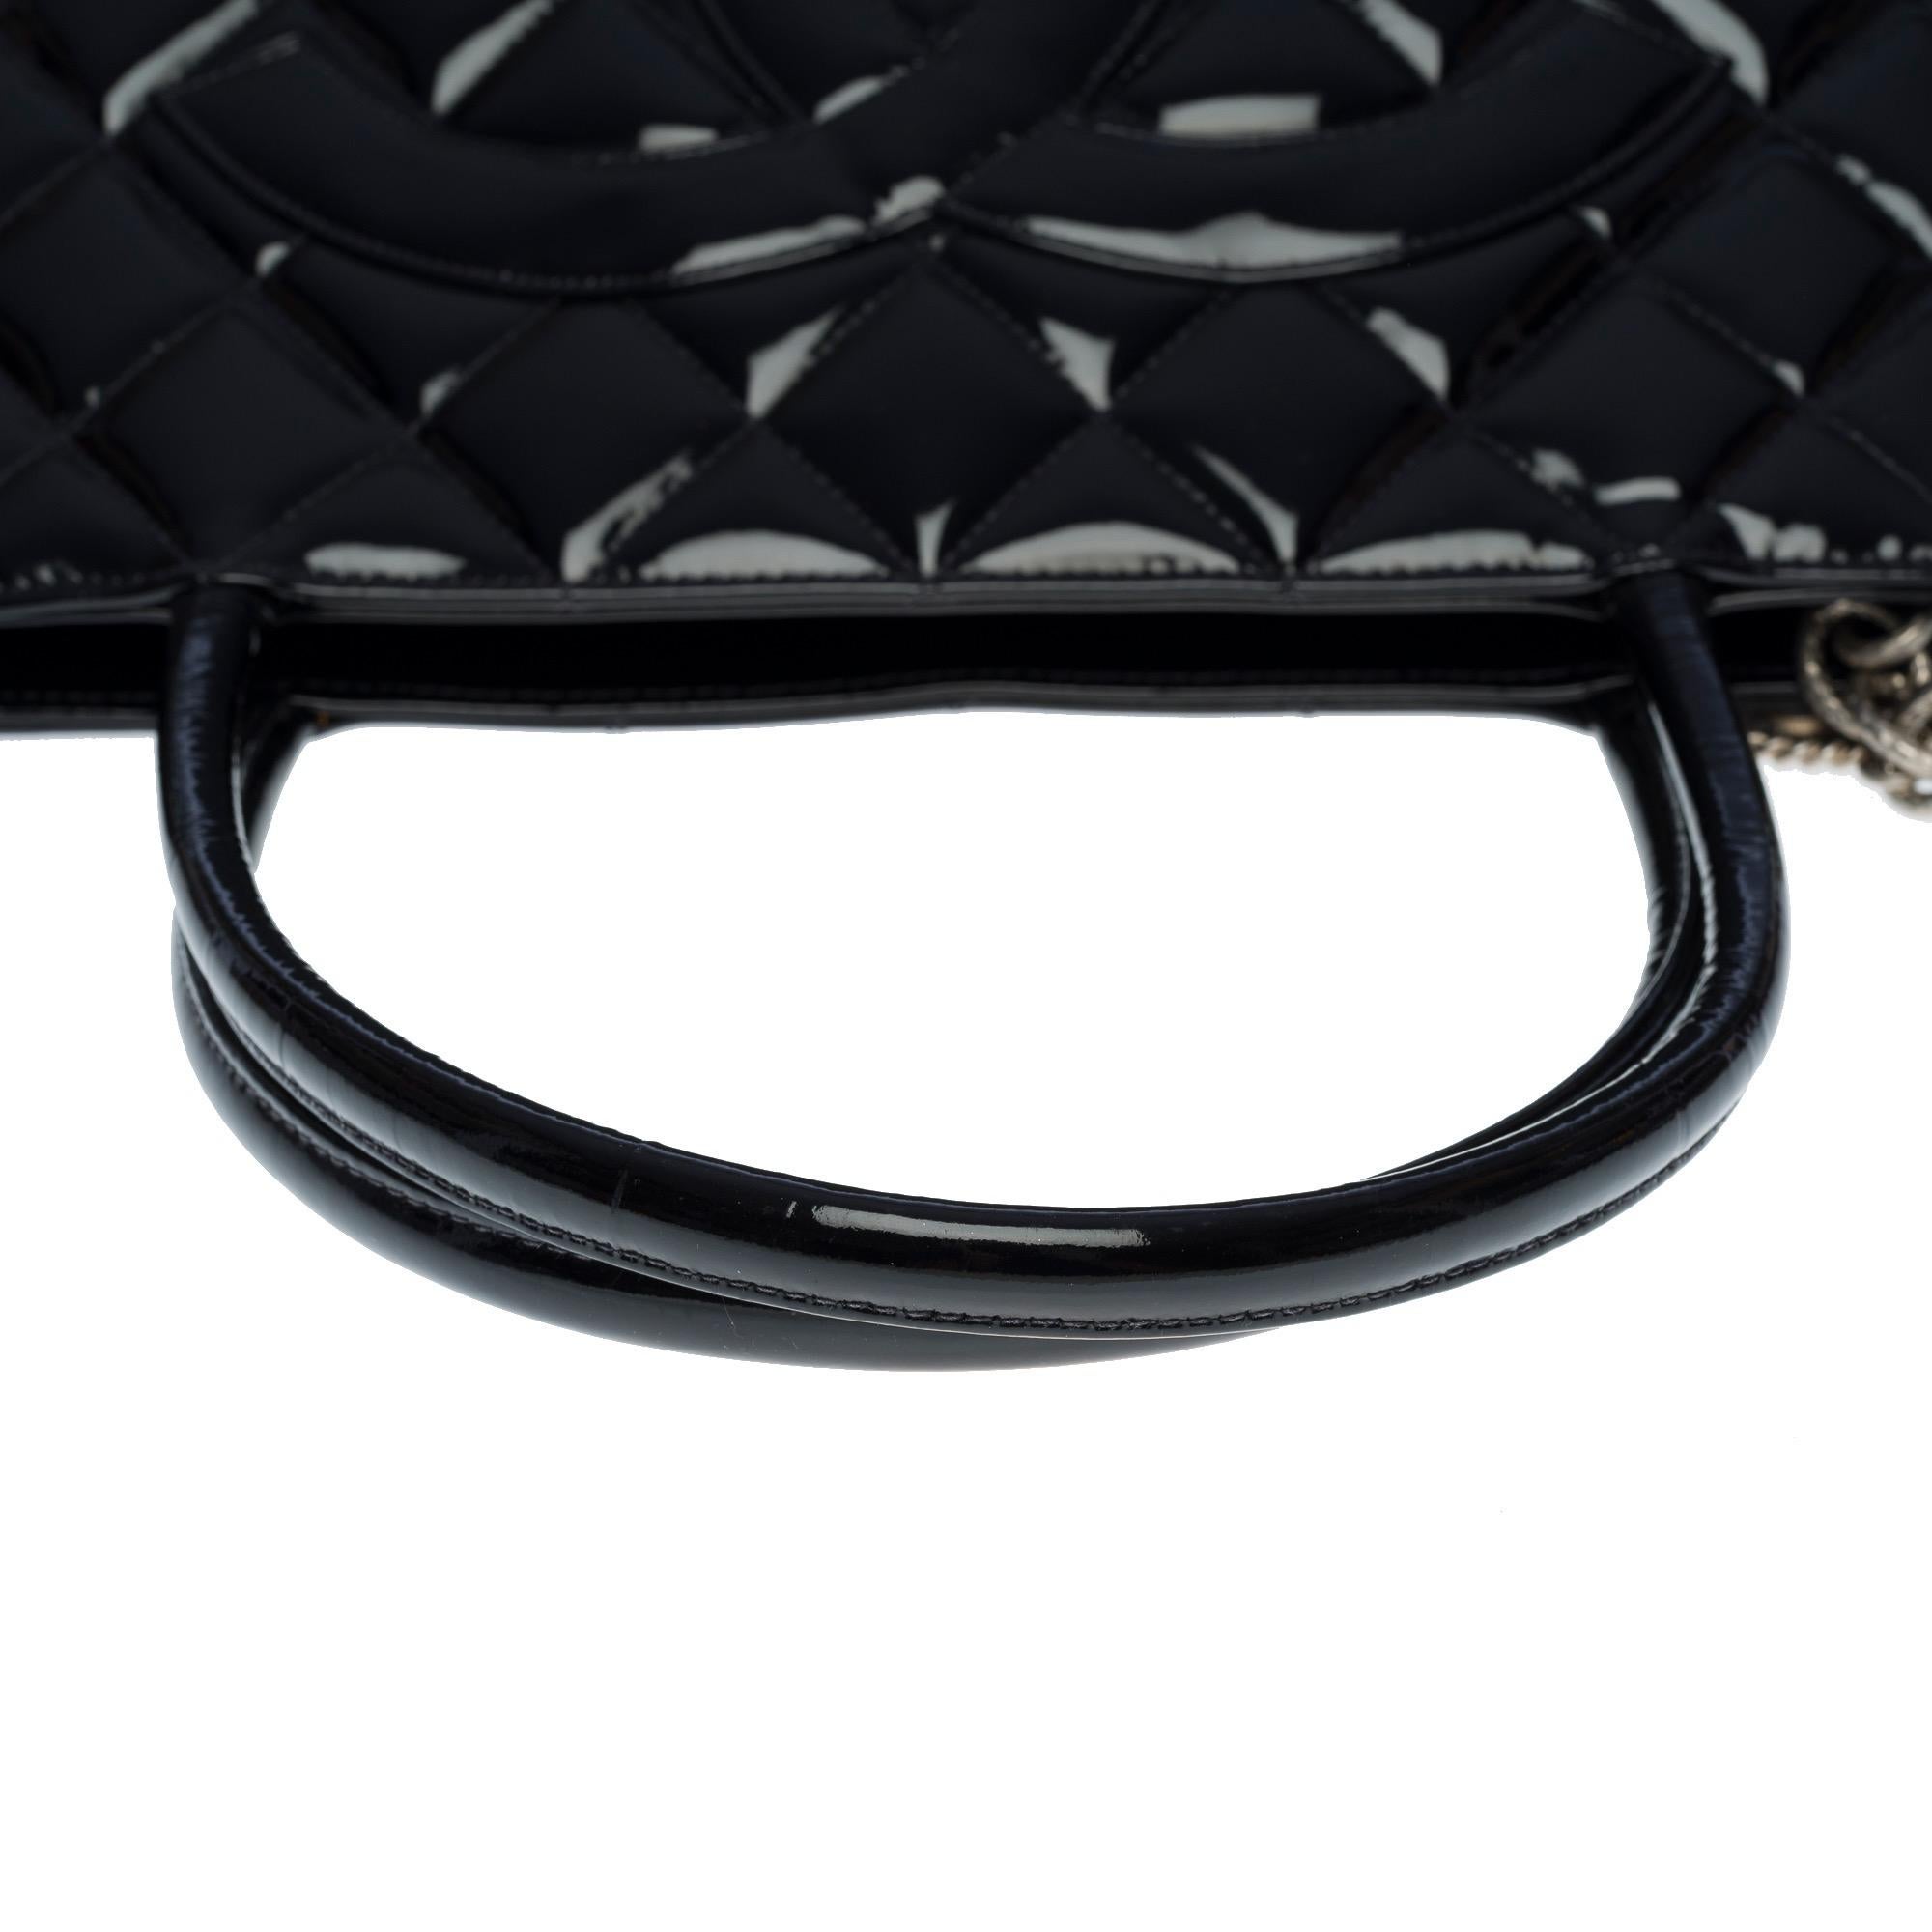 Magnifique sac Cabas Medallion de Chanel en cuir verni noir, SHW en vente 4